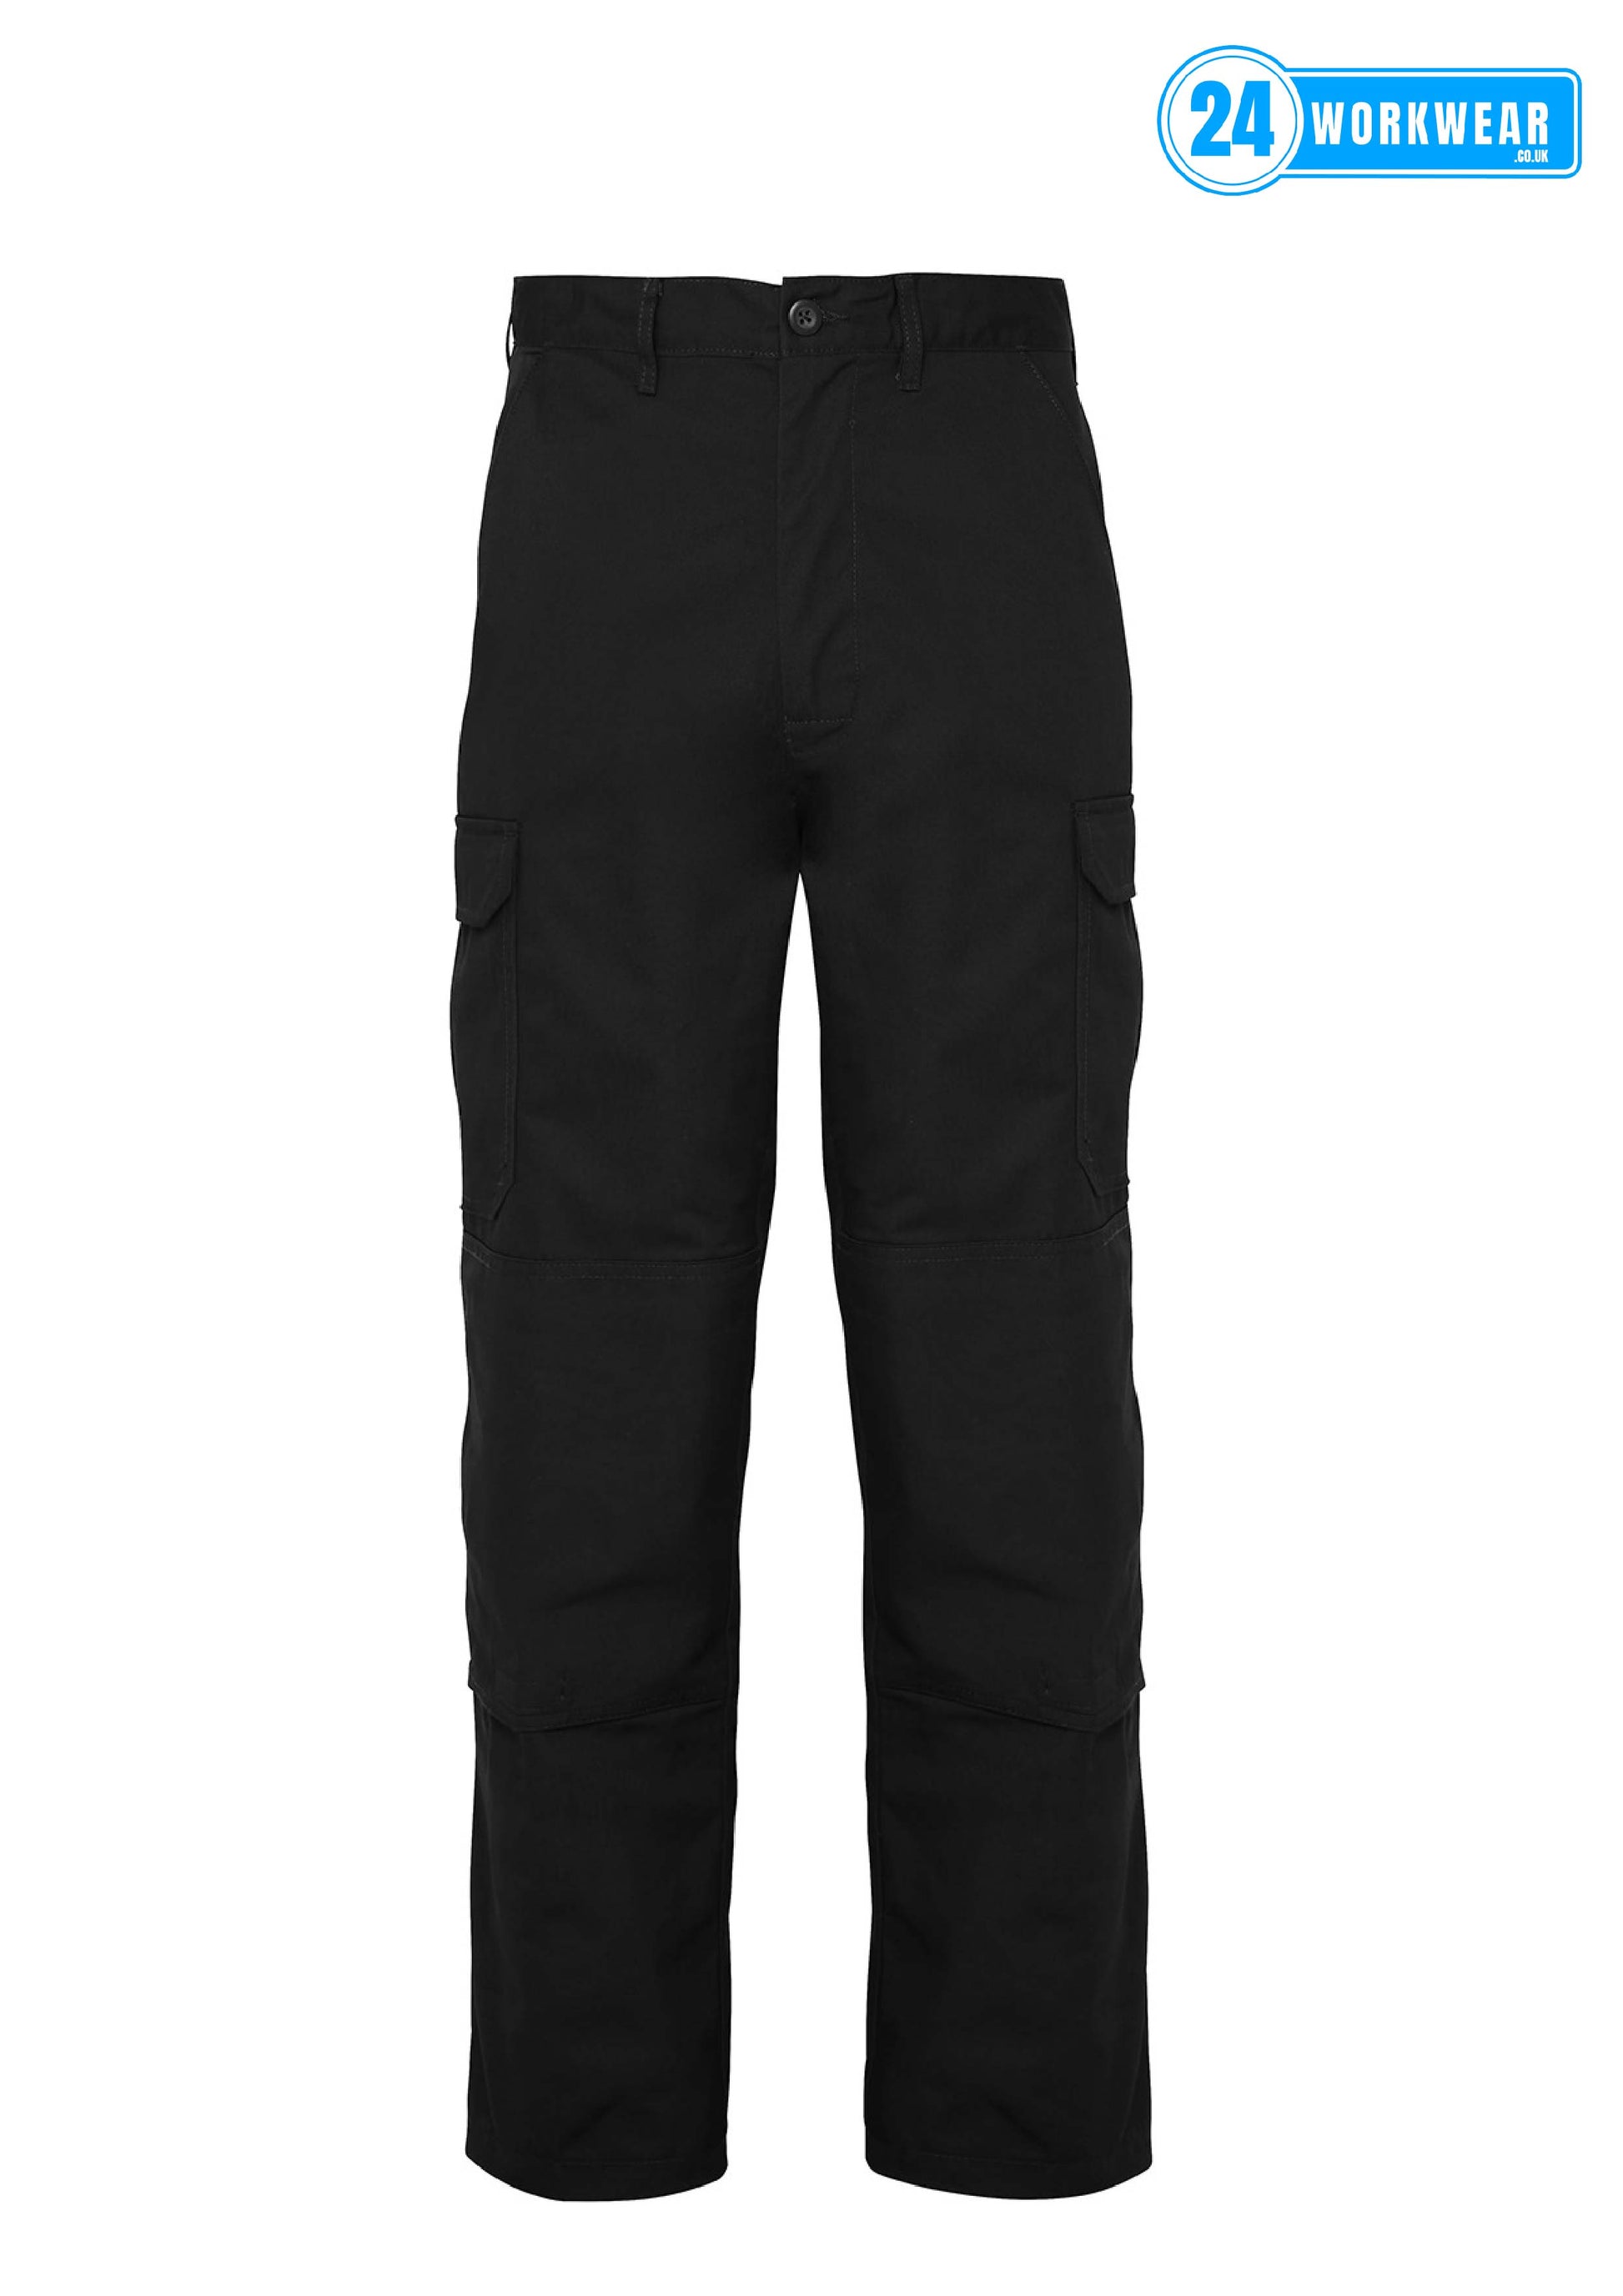 Pro RTX Cargo Workwear Trousers - 24 Workwear - Trousers